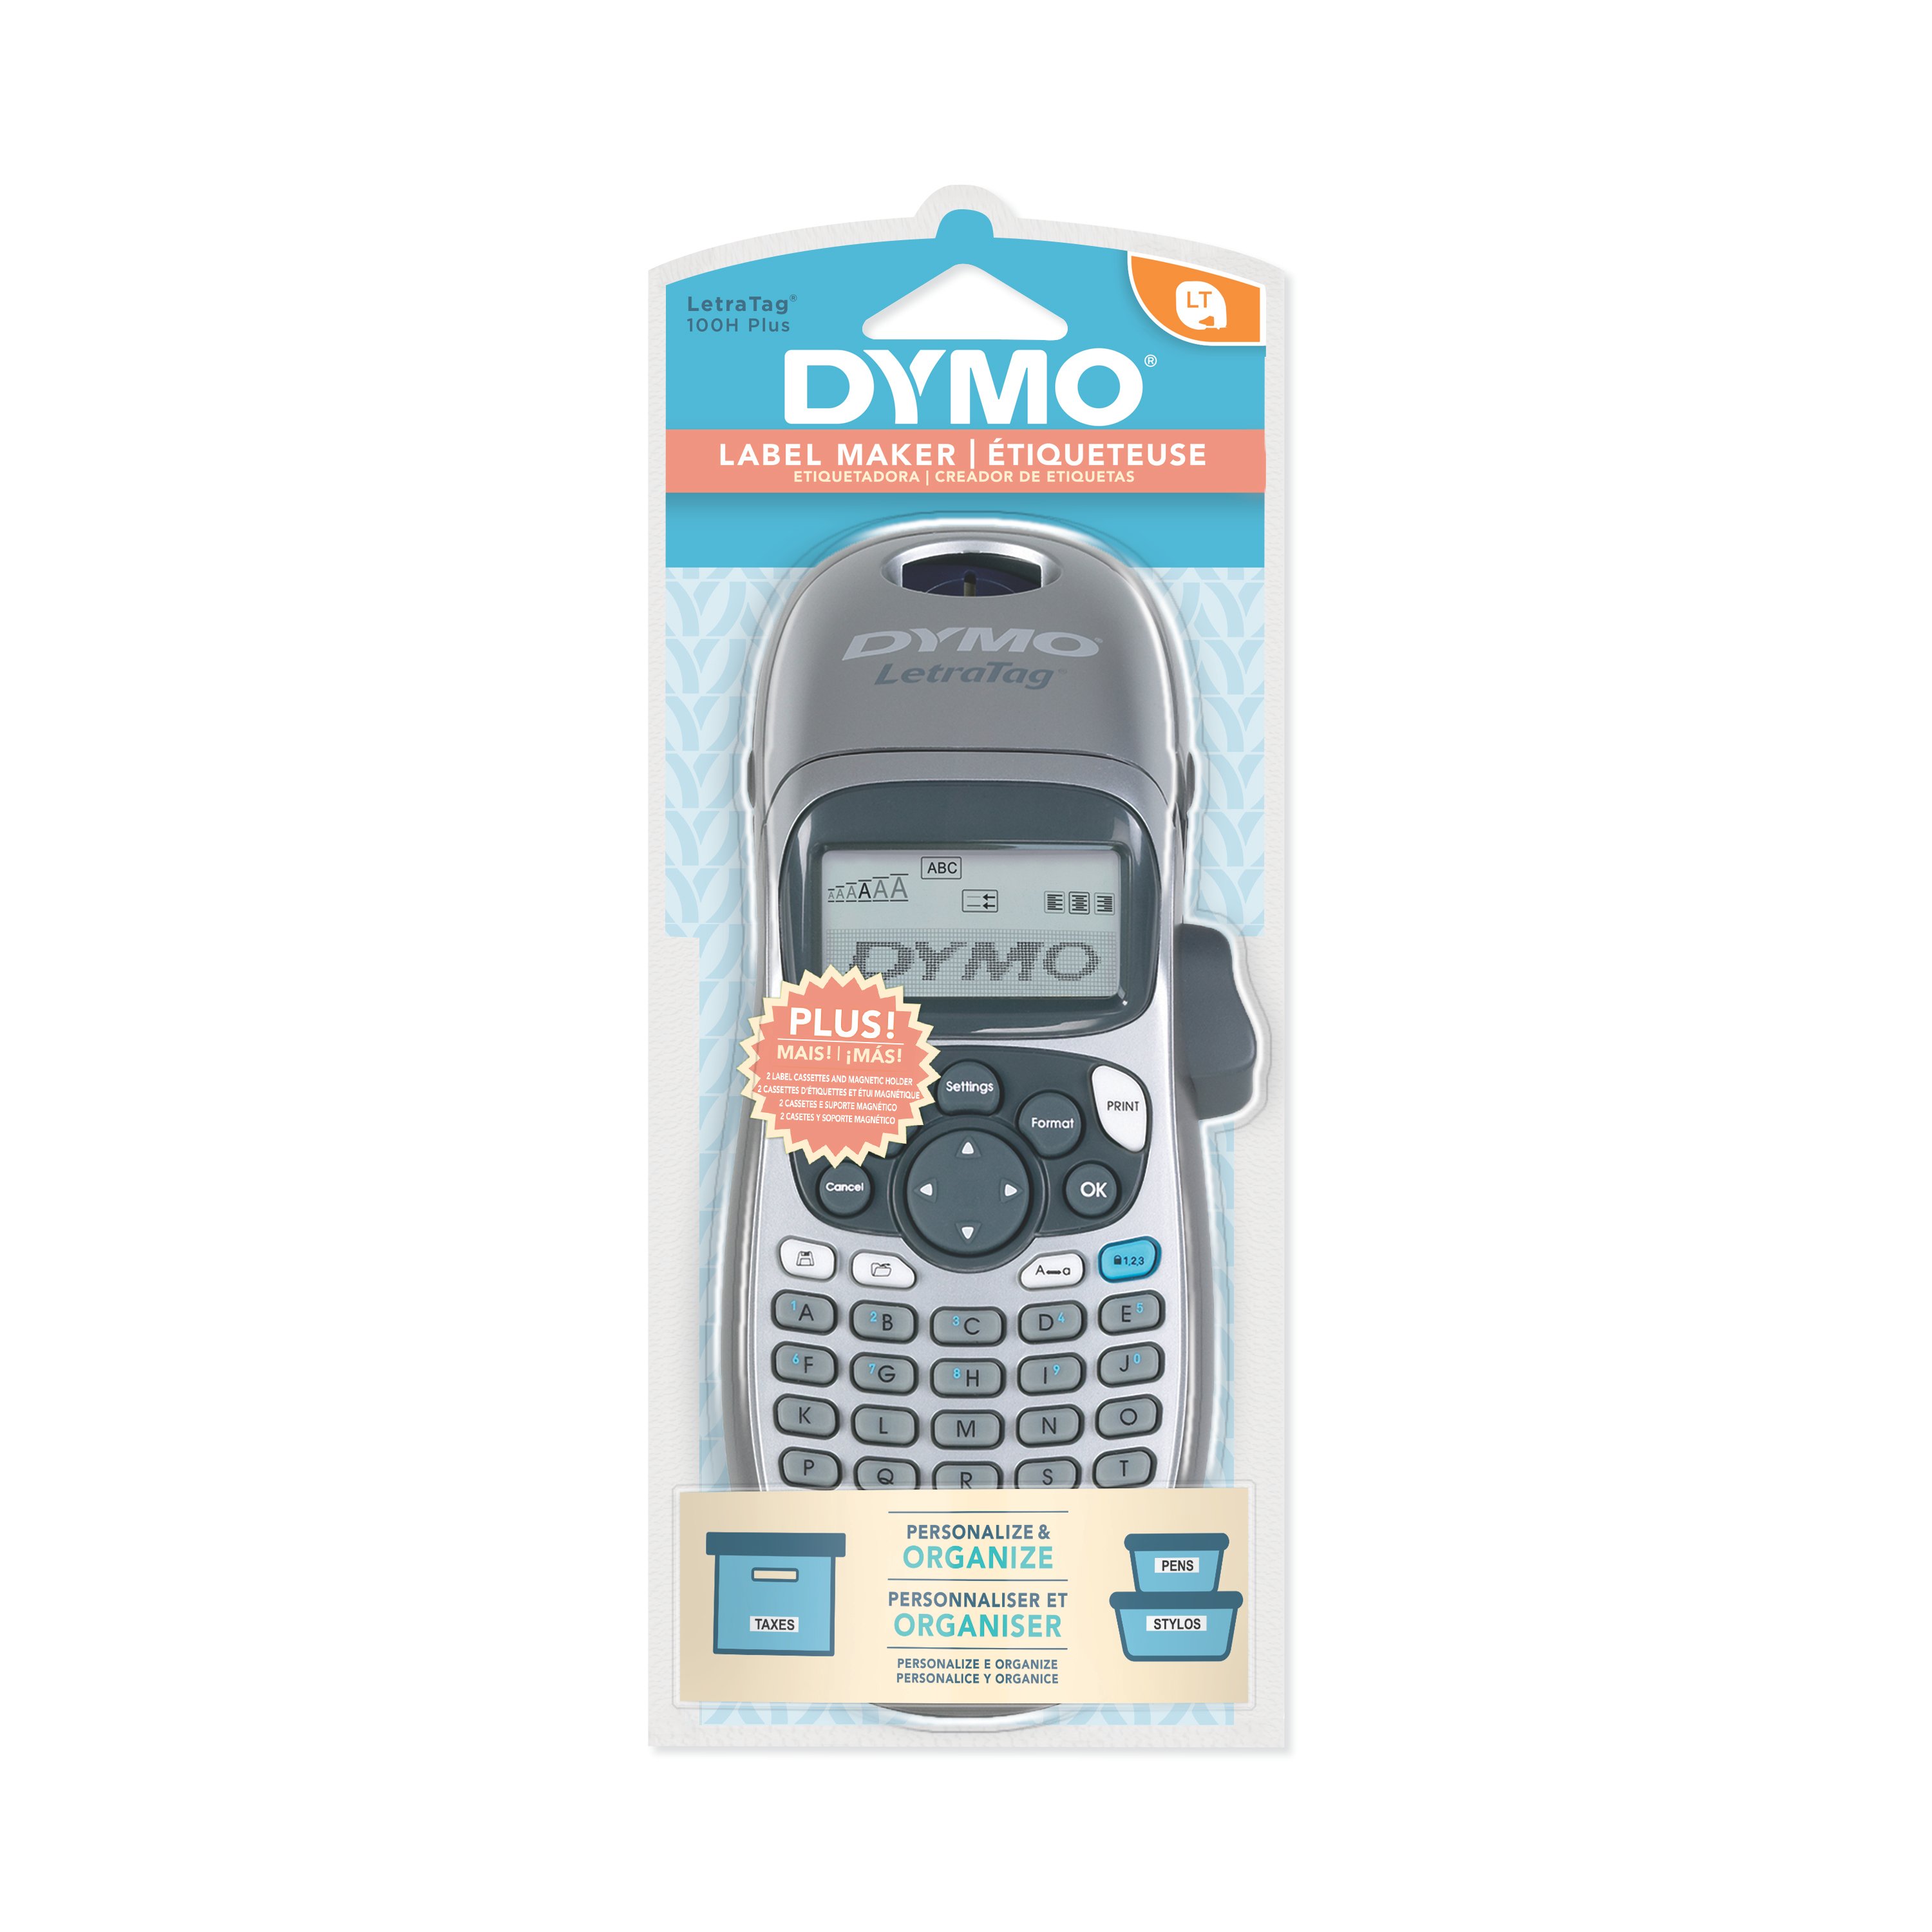 DYMO LetraTag 100H Plus Handheld Label Maker | Dymo CA